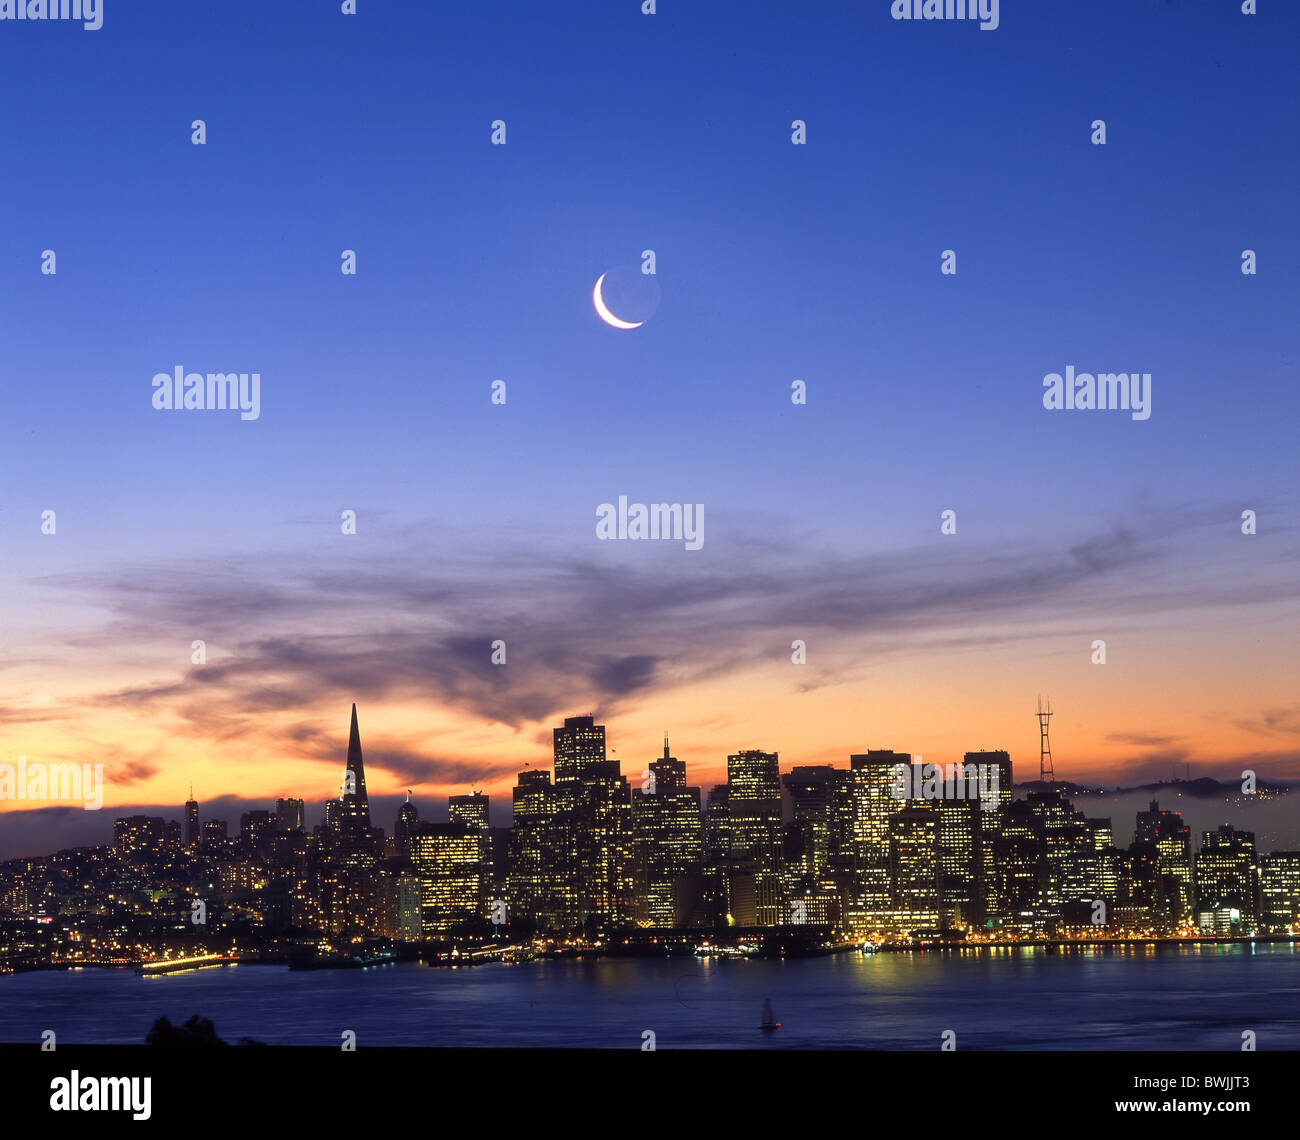 San Francisco skyline moon crescent at night nacht dusk twilight town city California USA America United Stock Photo